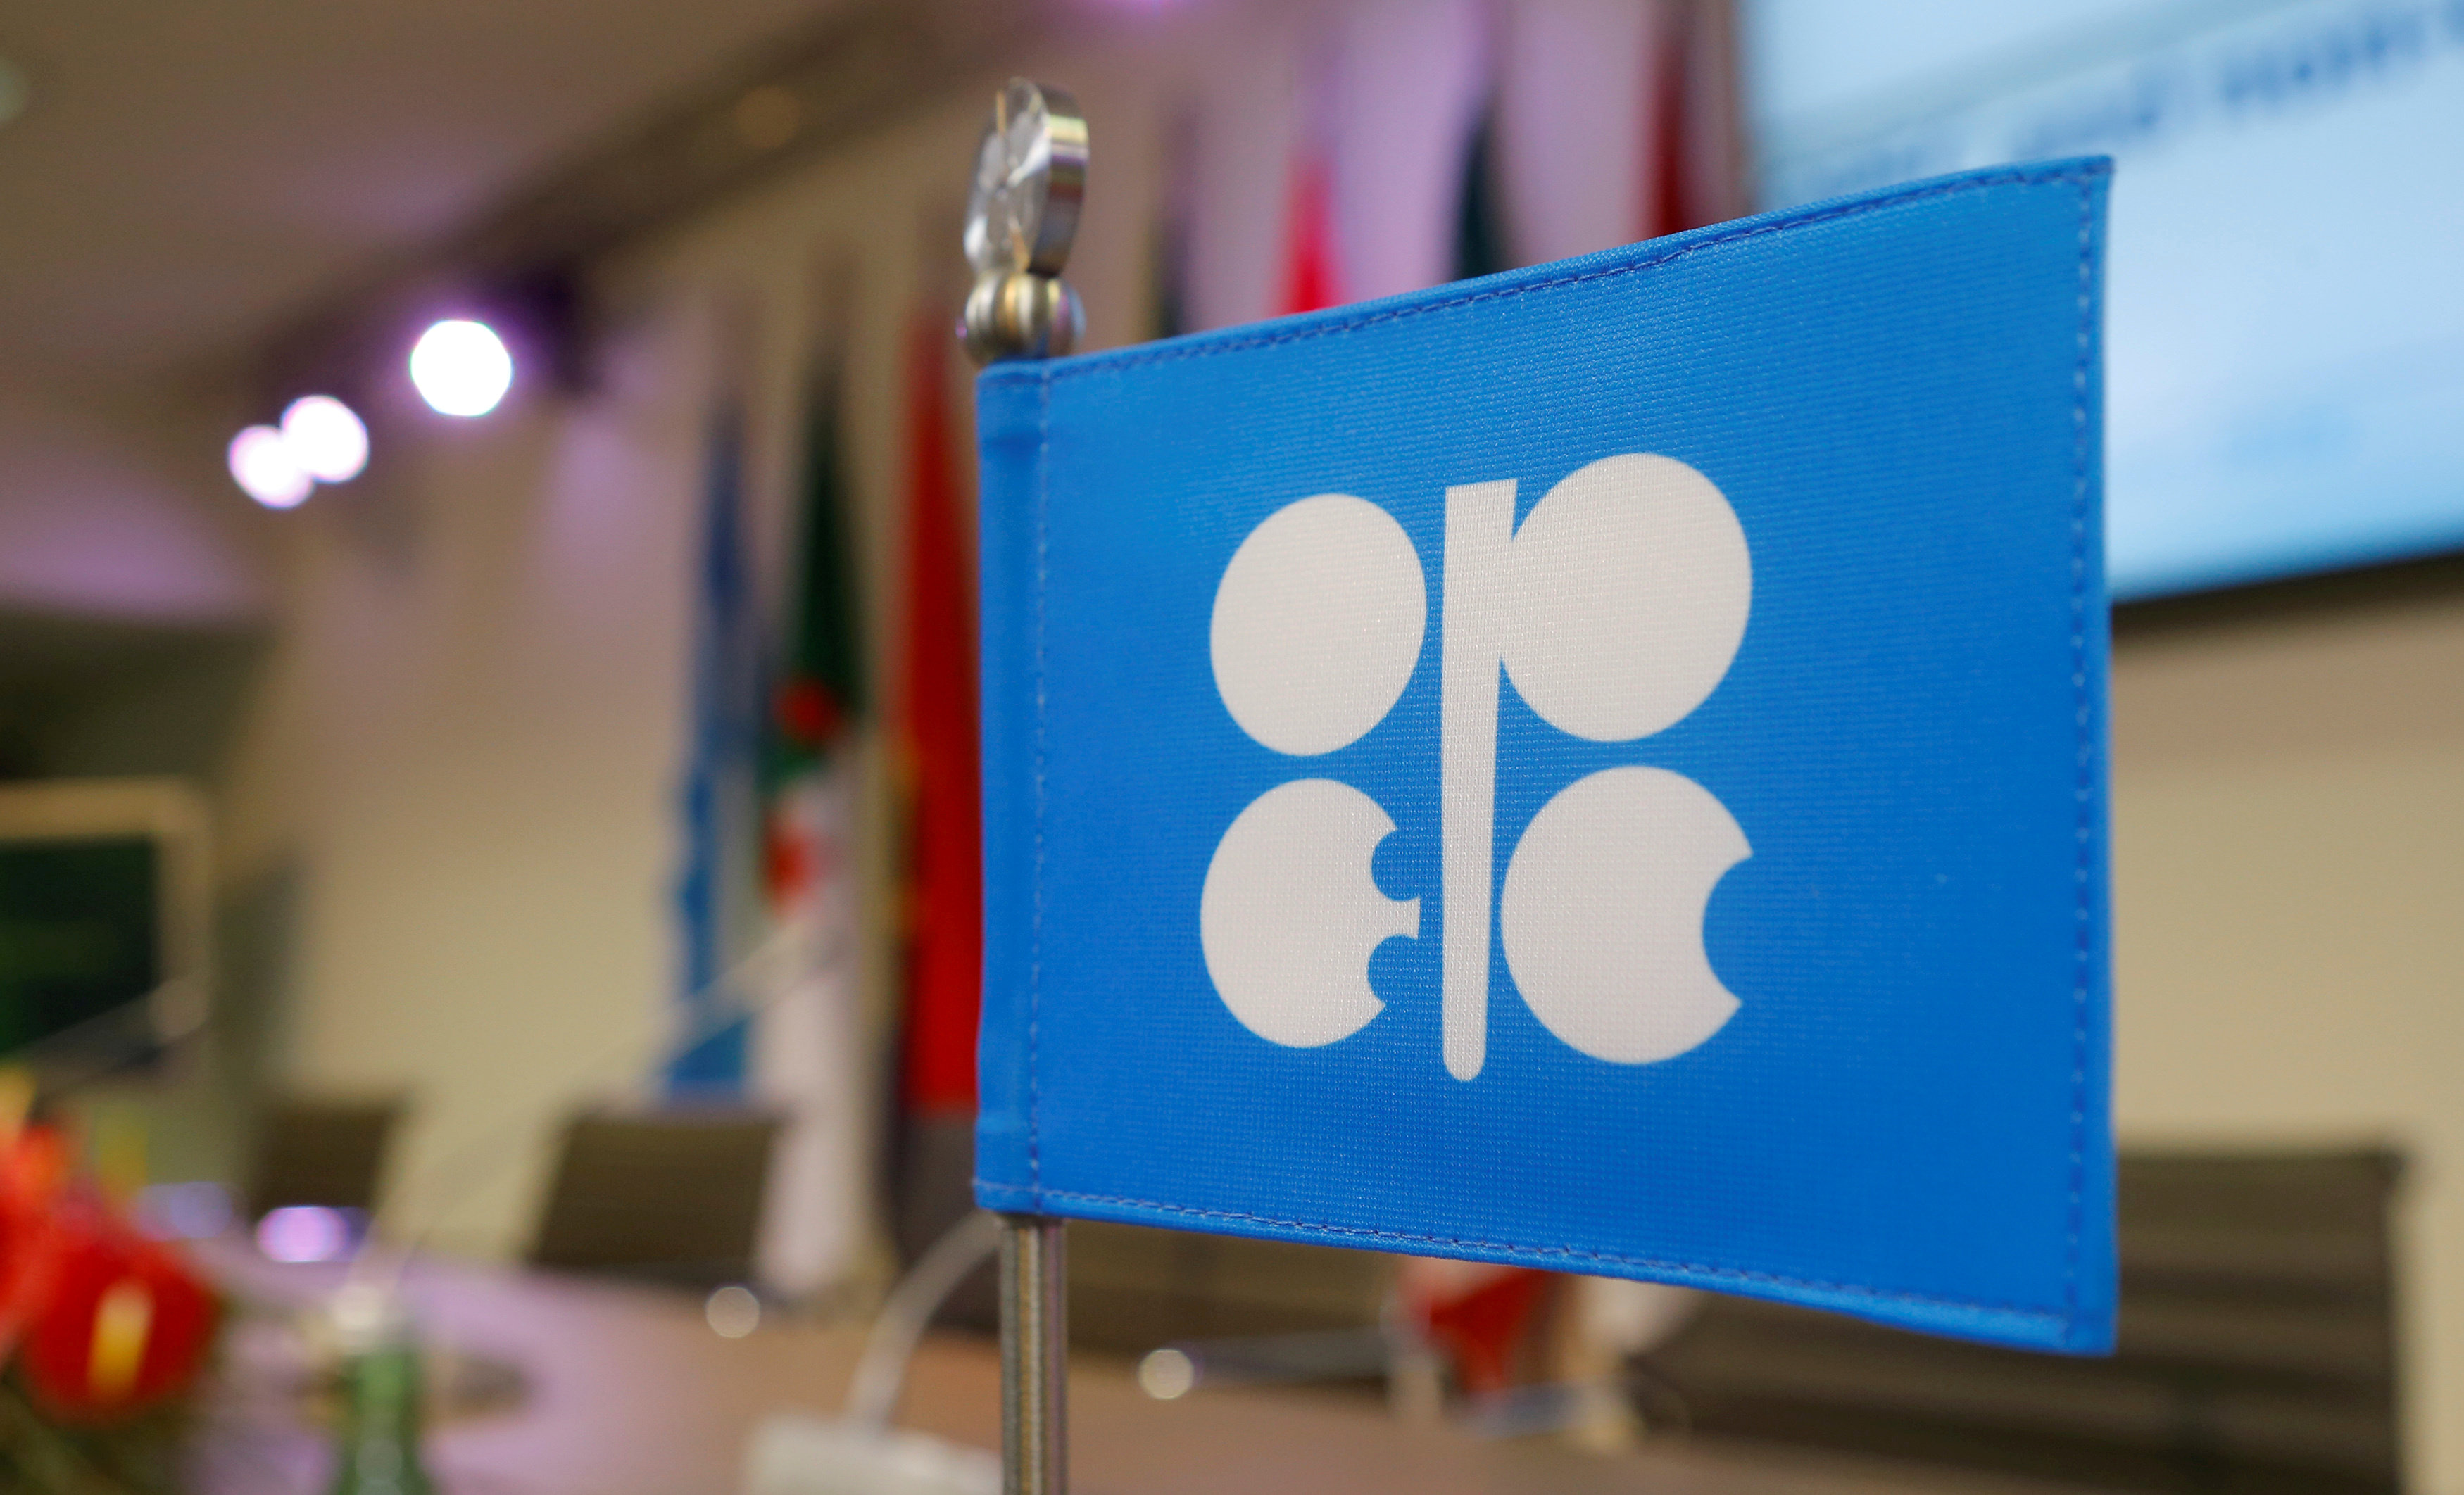 'Mission accomplished' for OPEC as oil stocks shrink: IEA